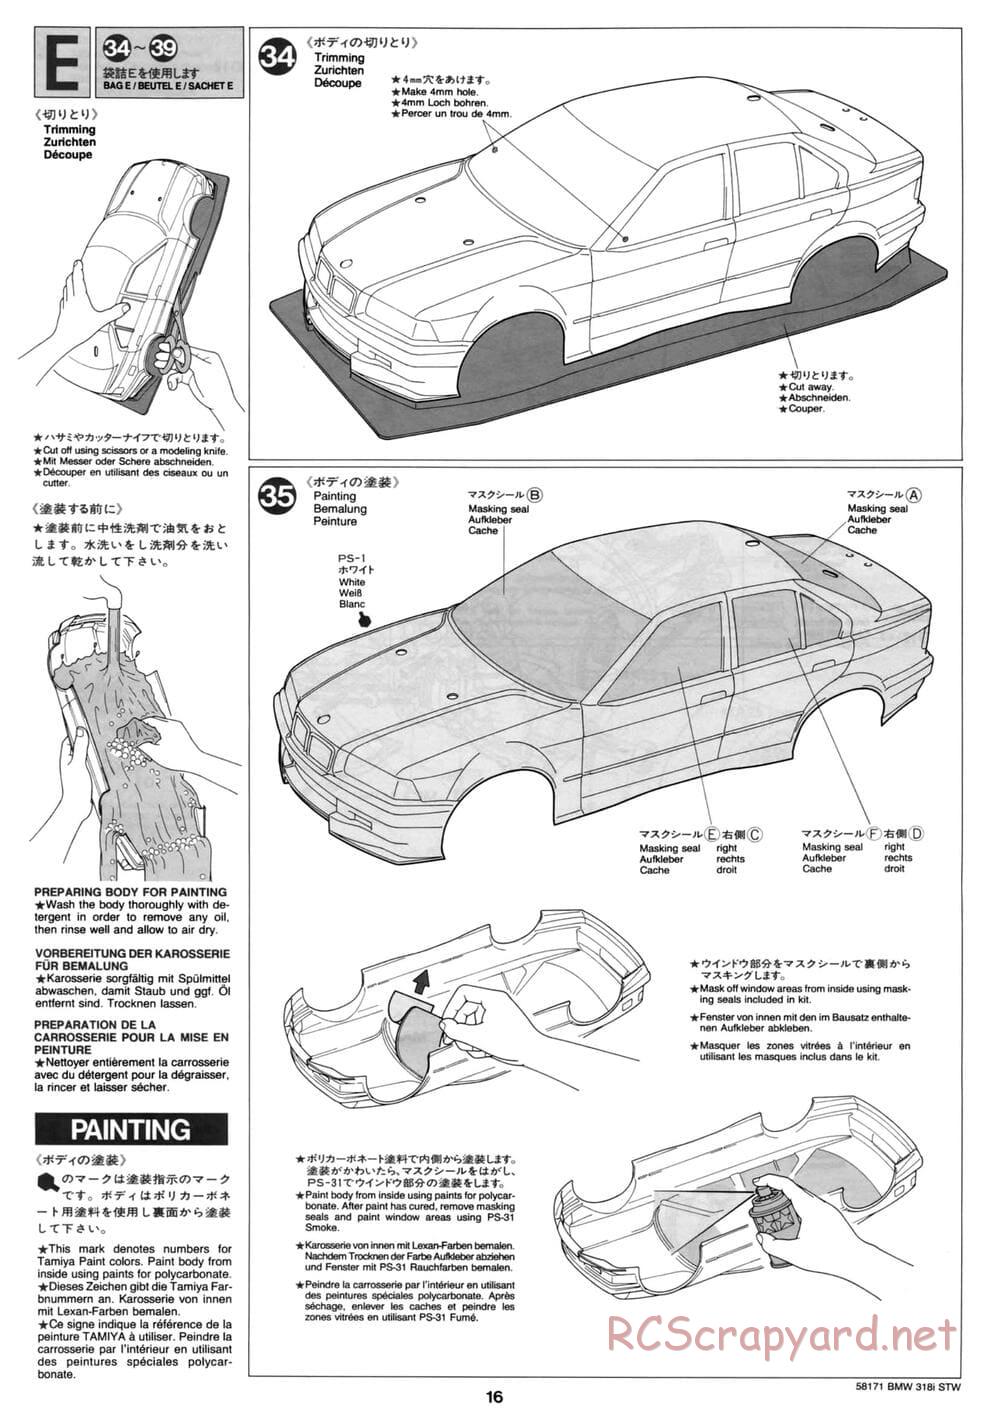 Tamiya - BMW 318i STW - TA-02 Chassis - Manual - Page 16